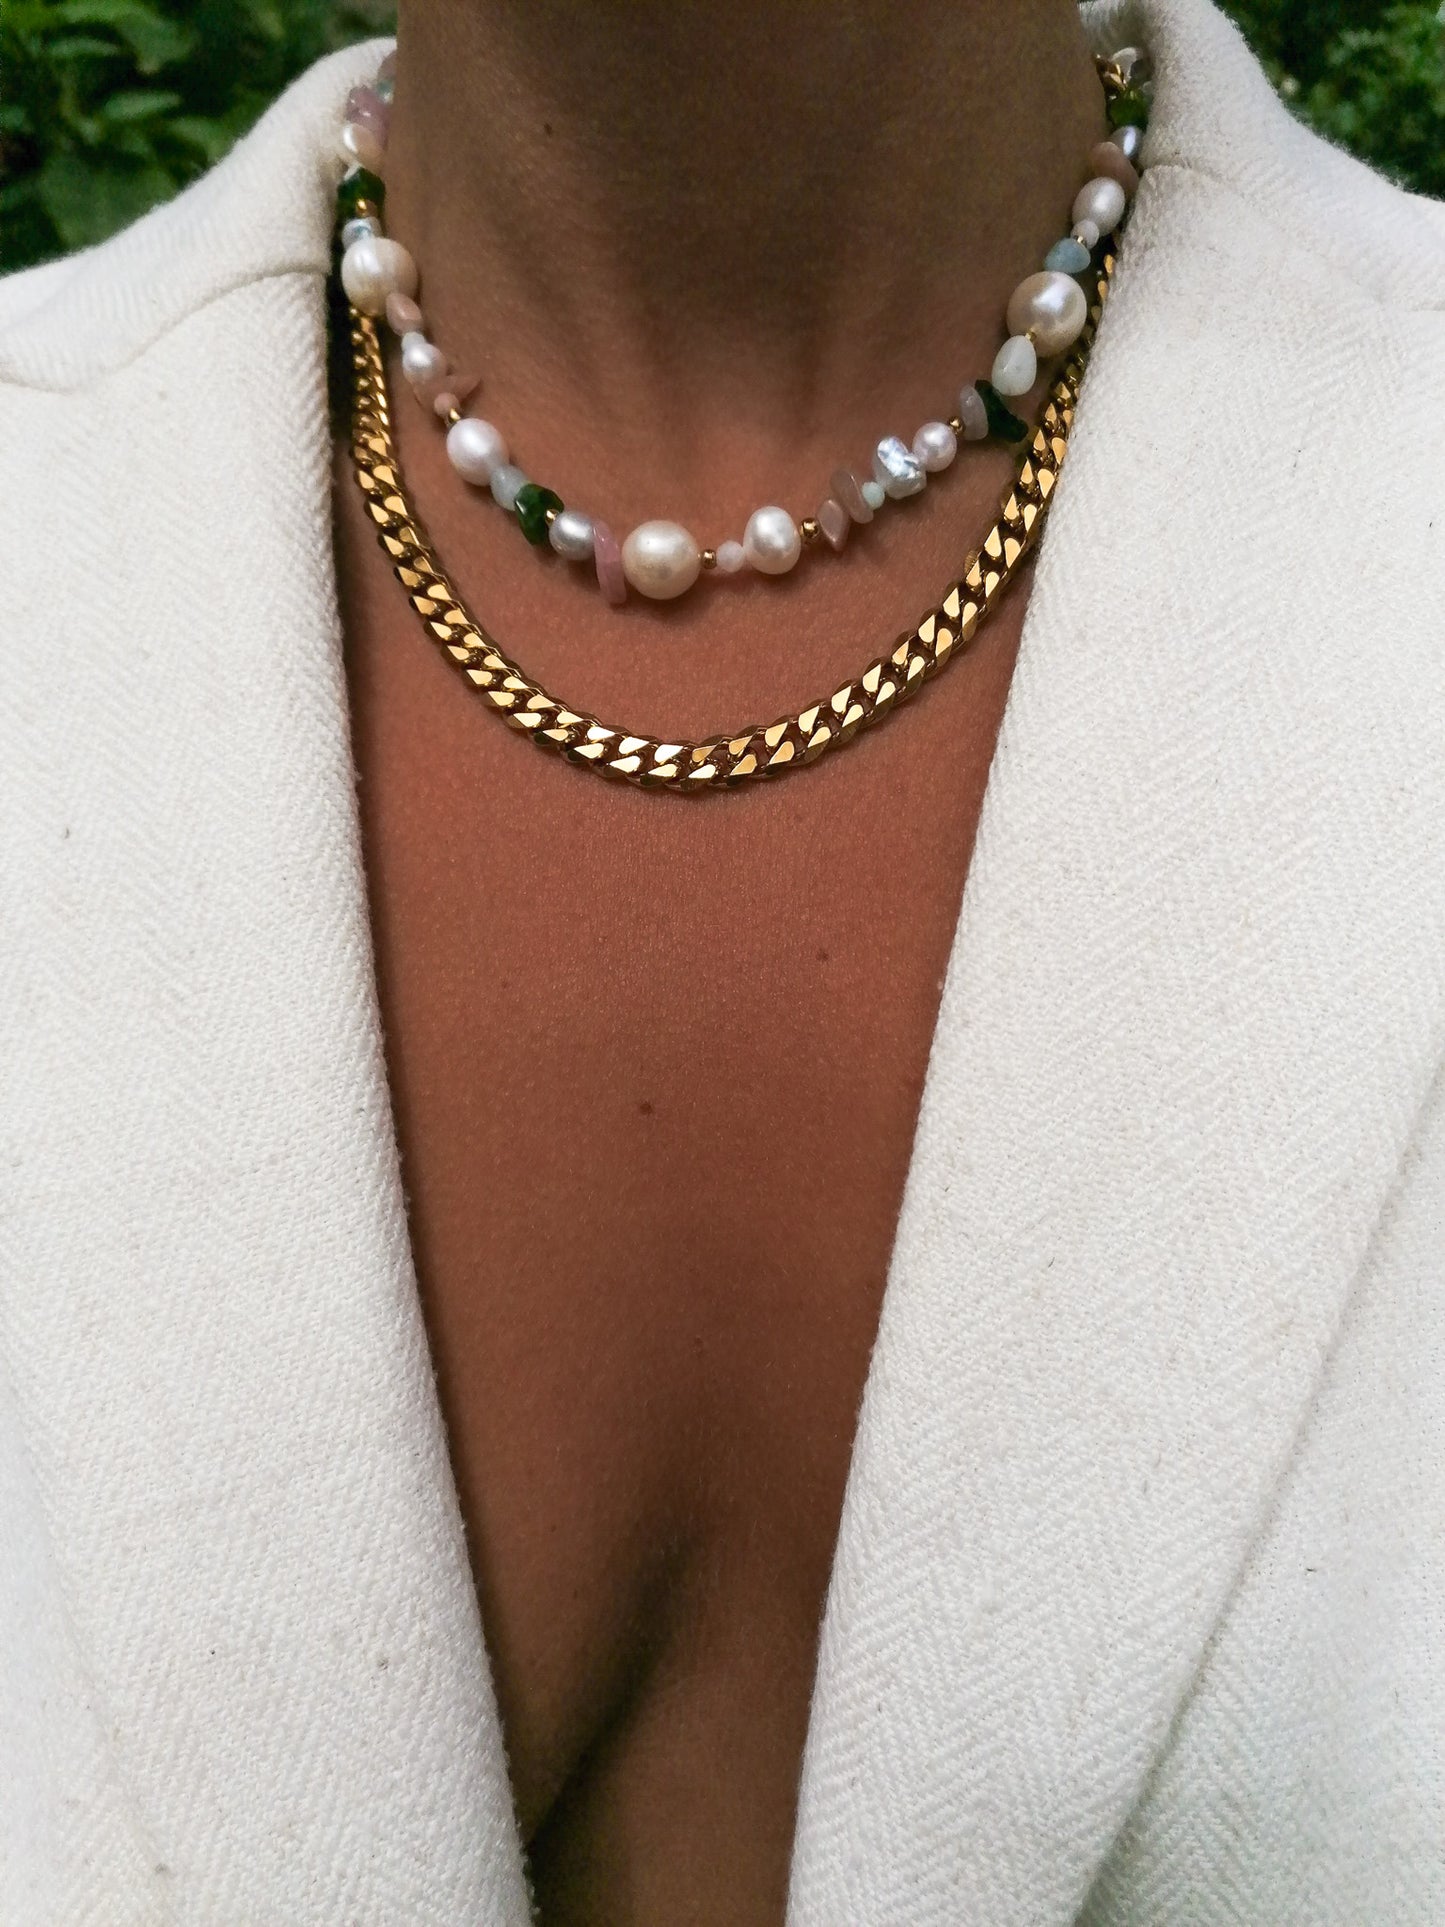 Melbourne necklace